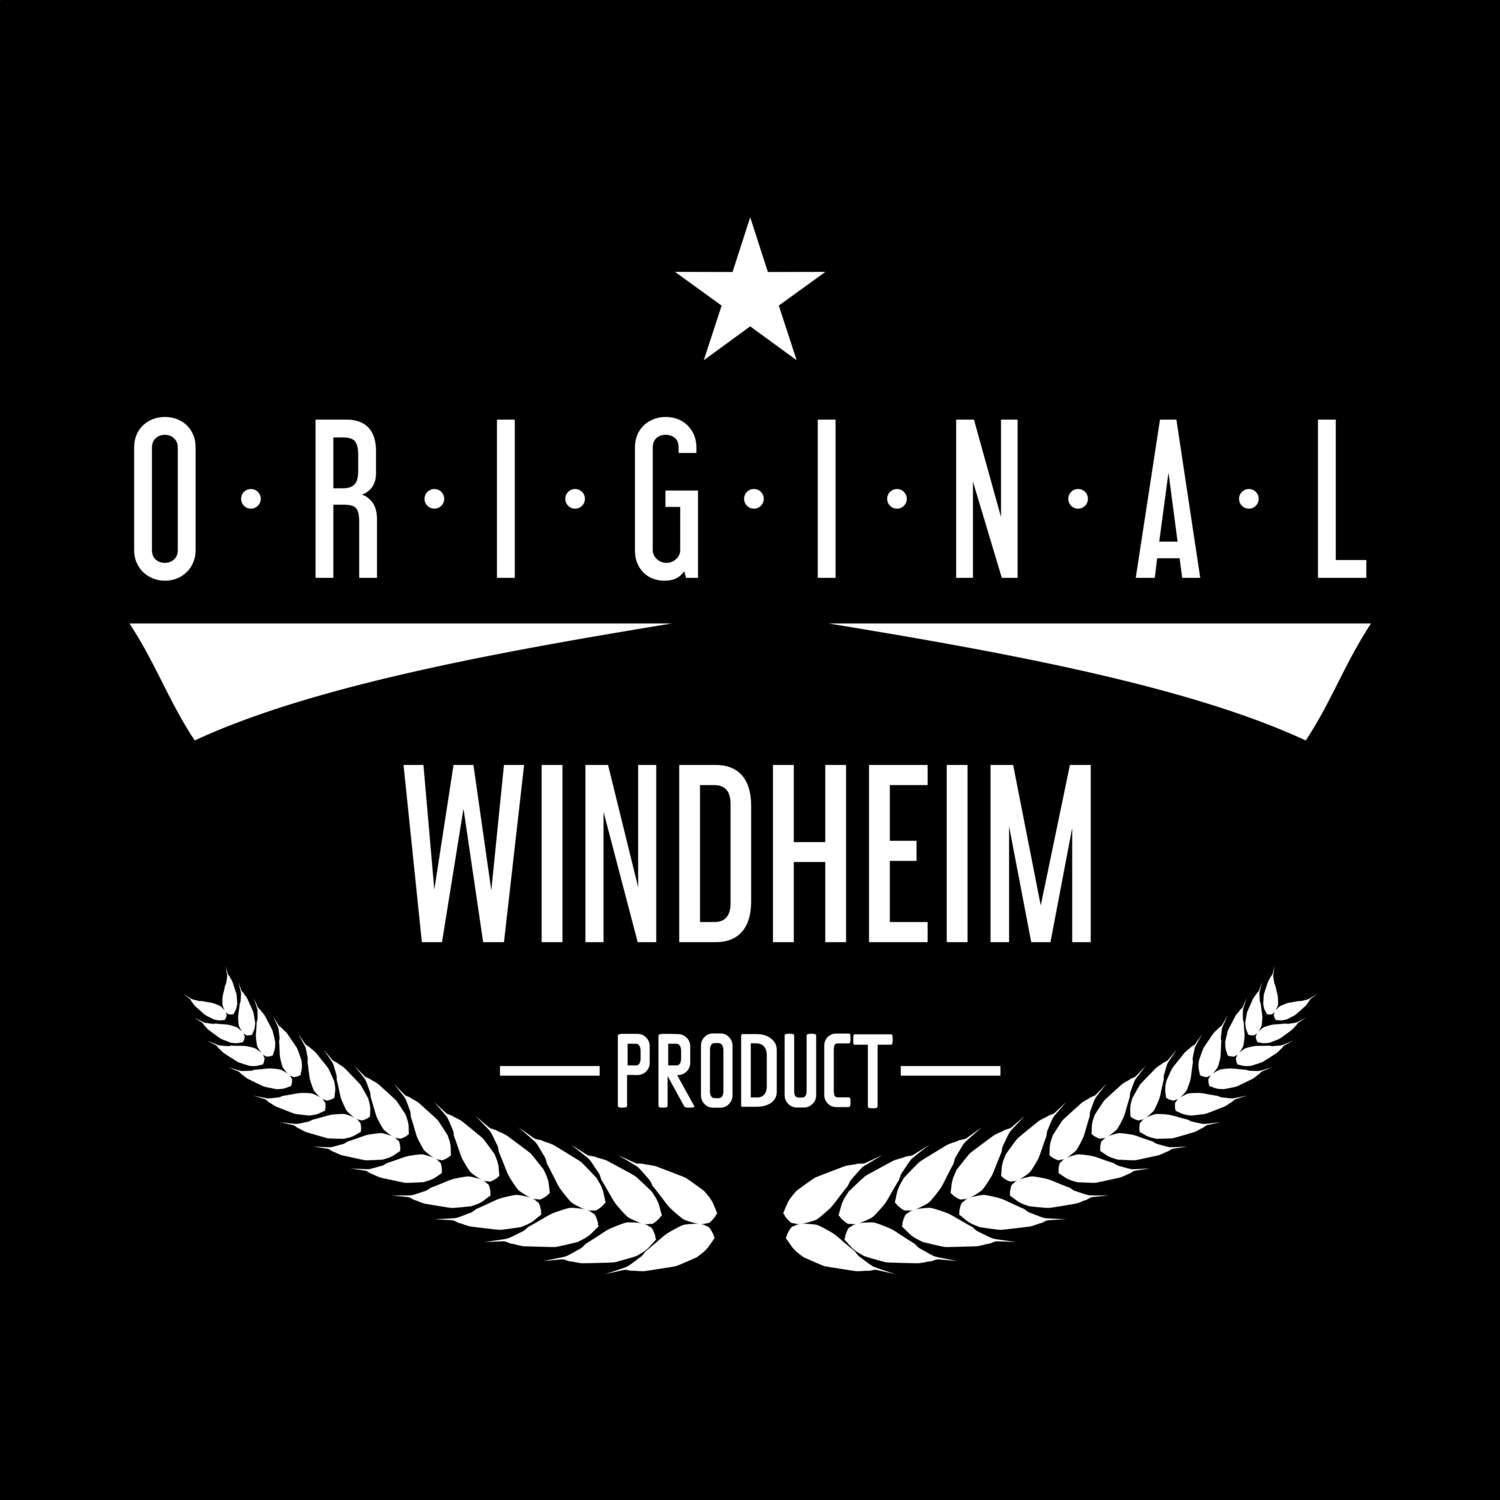 Windheim T-Shirt »Original Product«